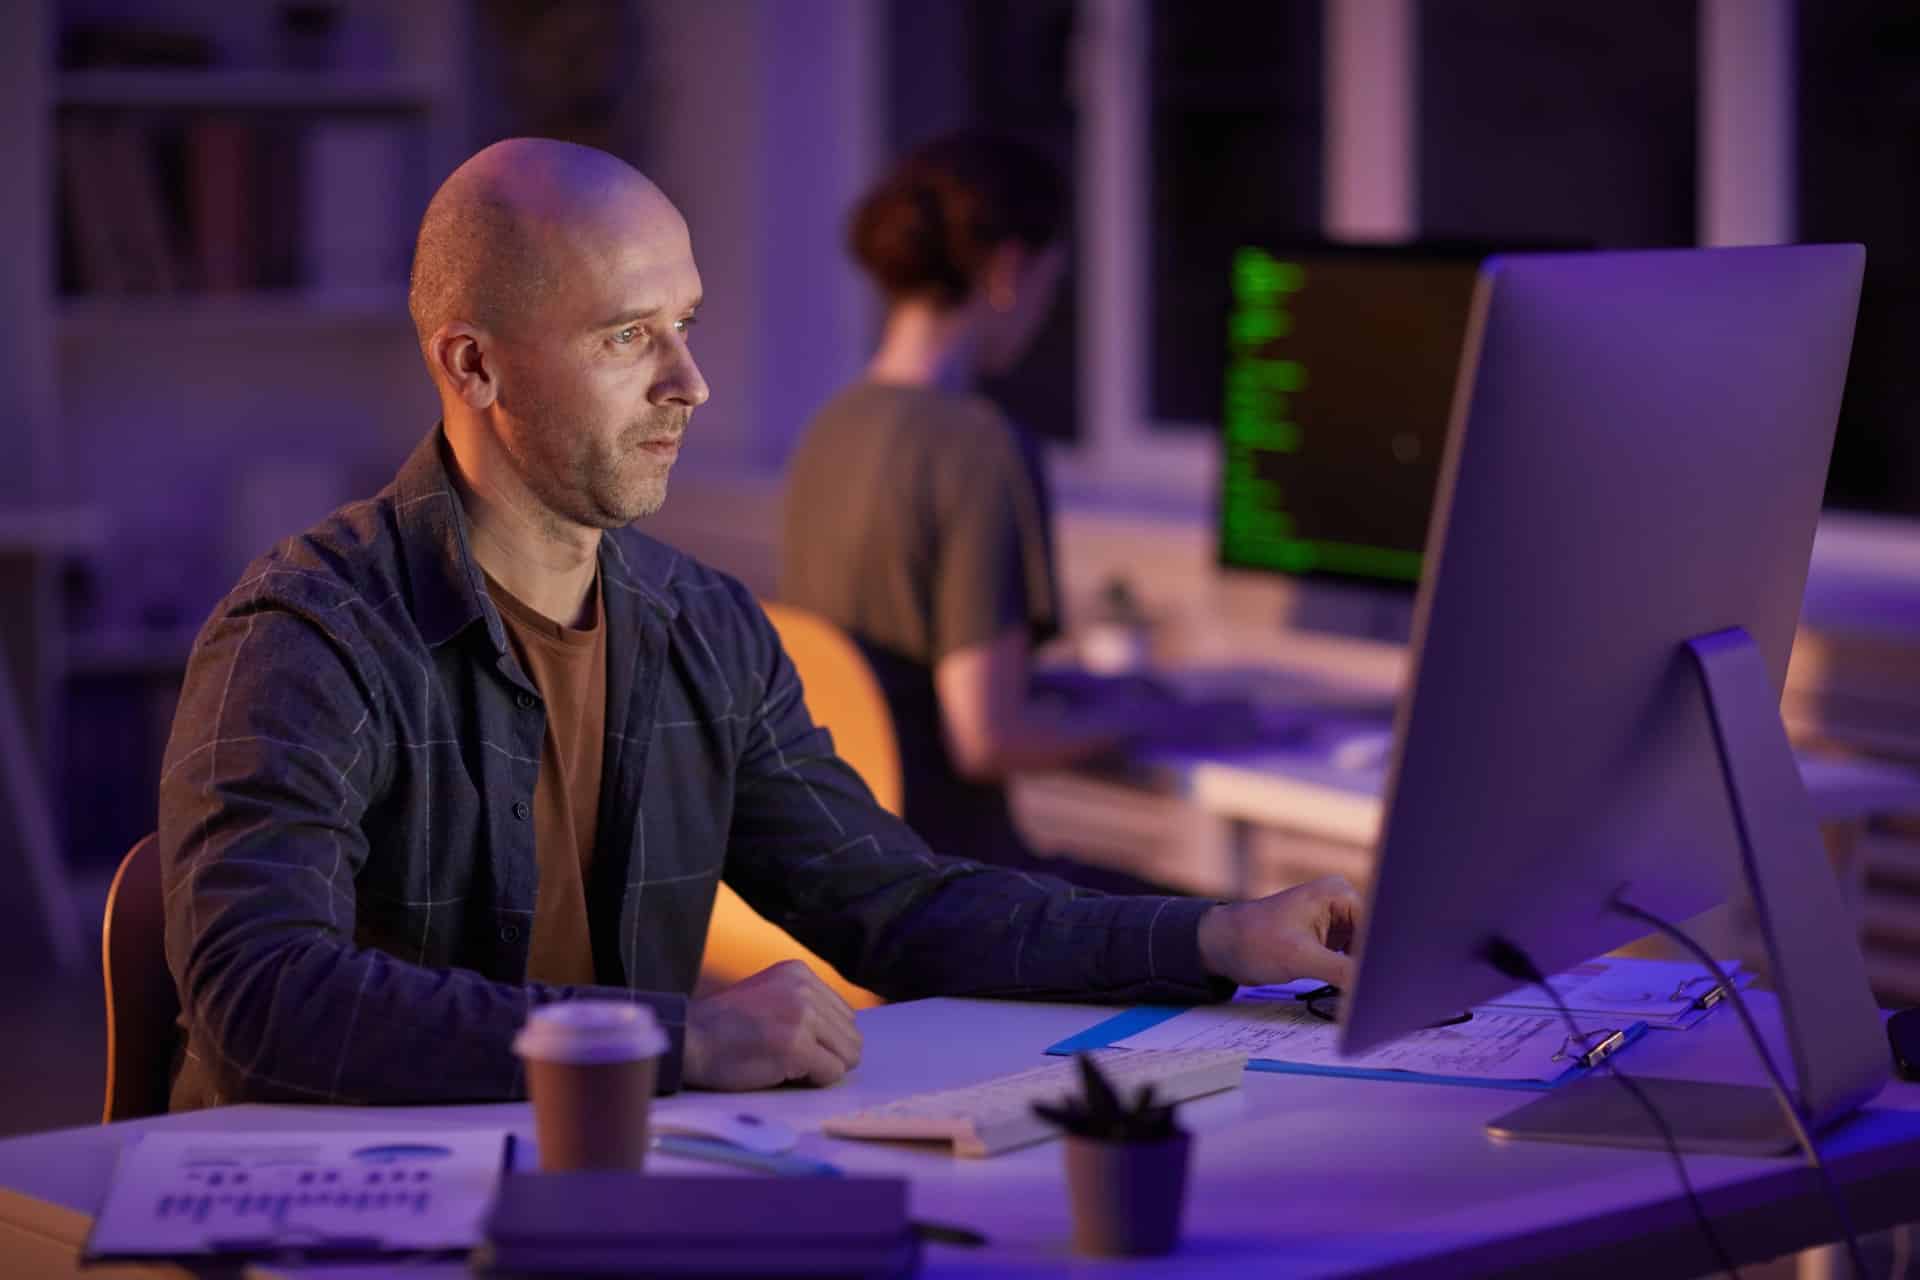 man works on computer with purple lighting